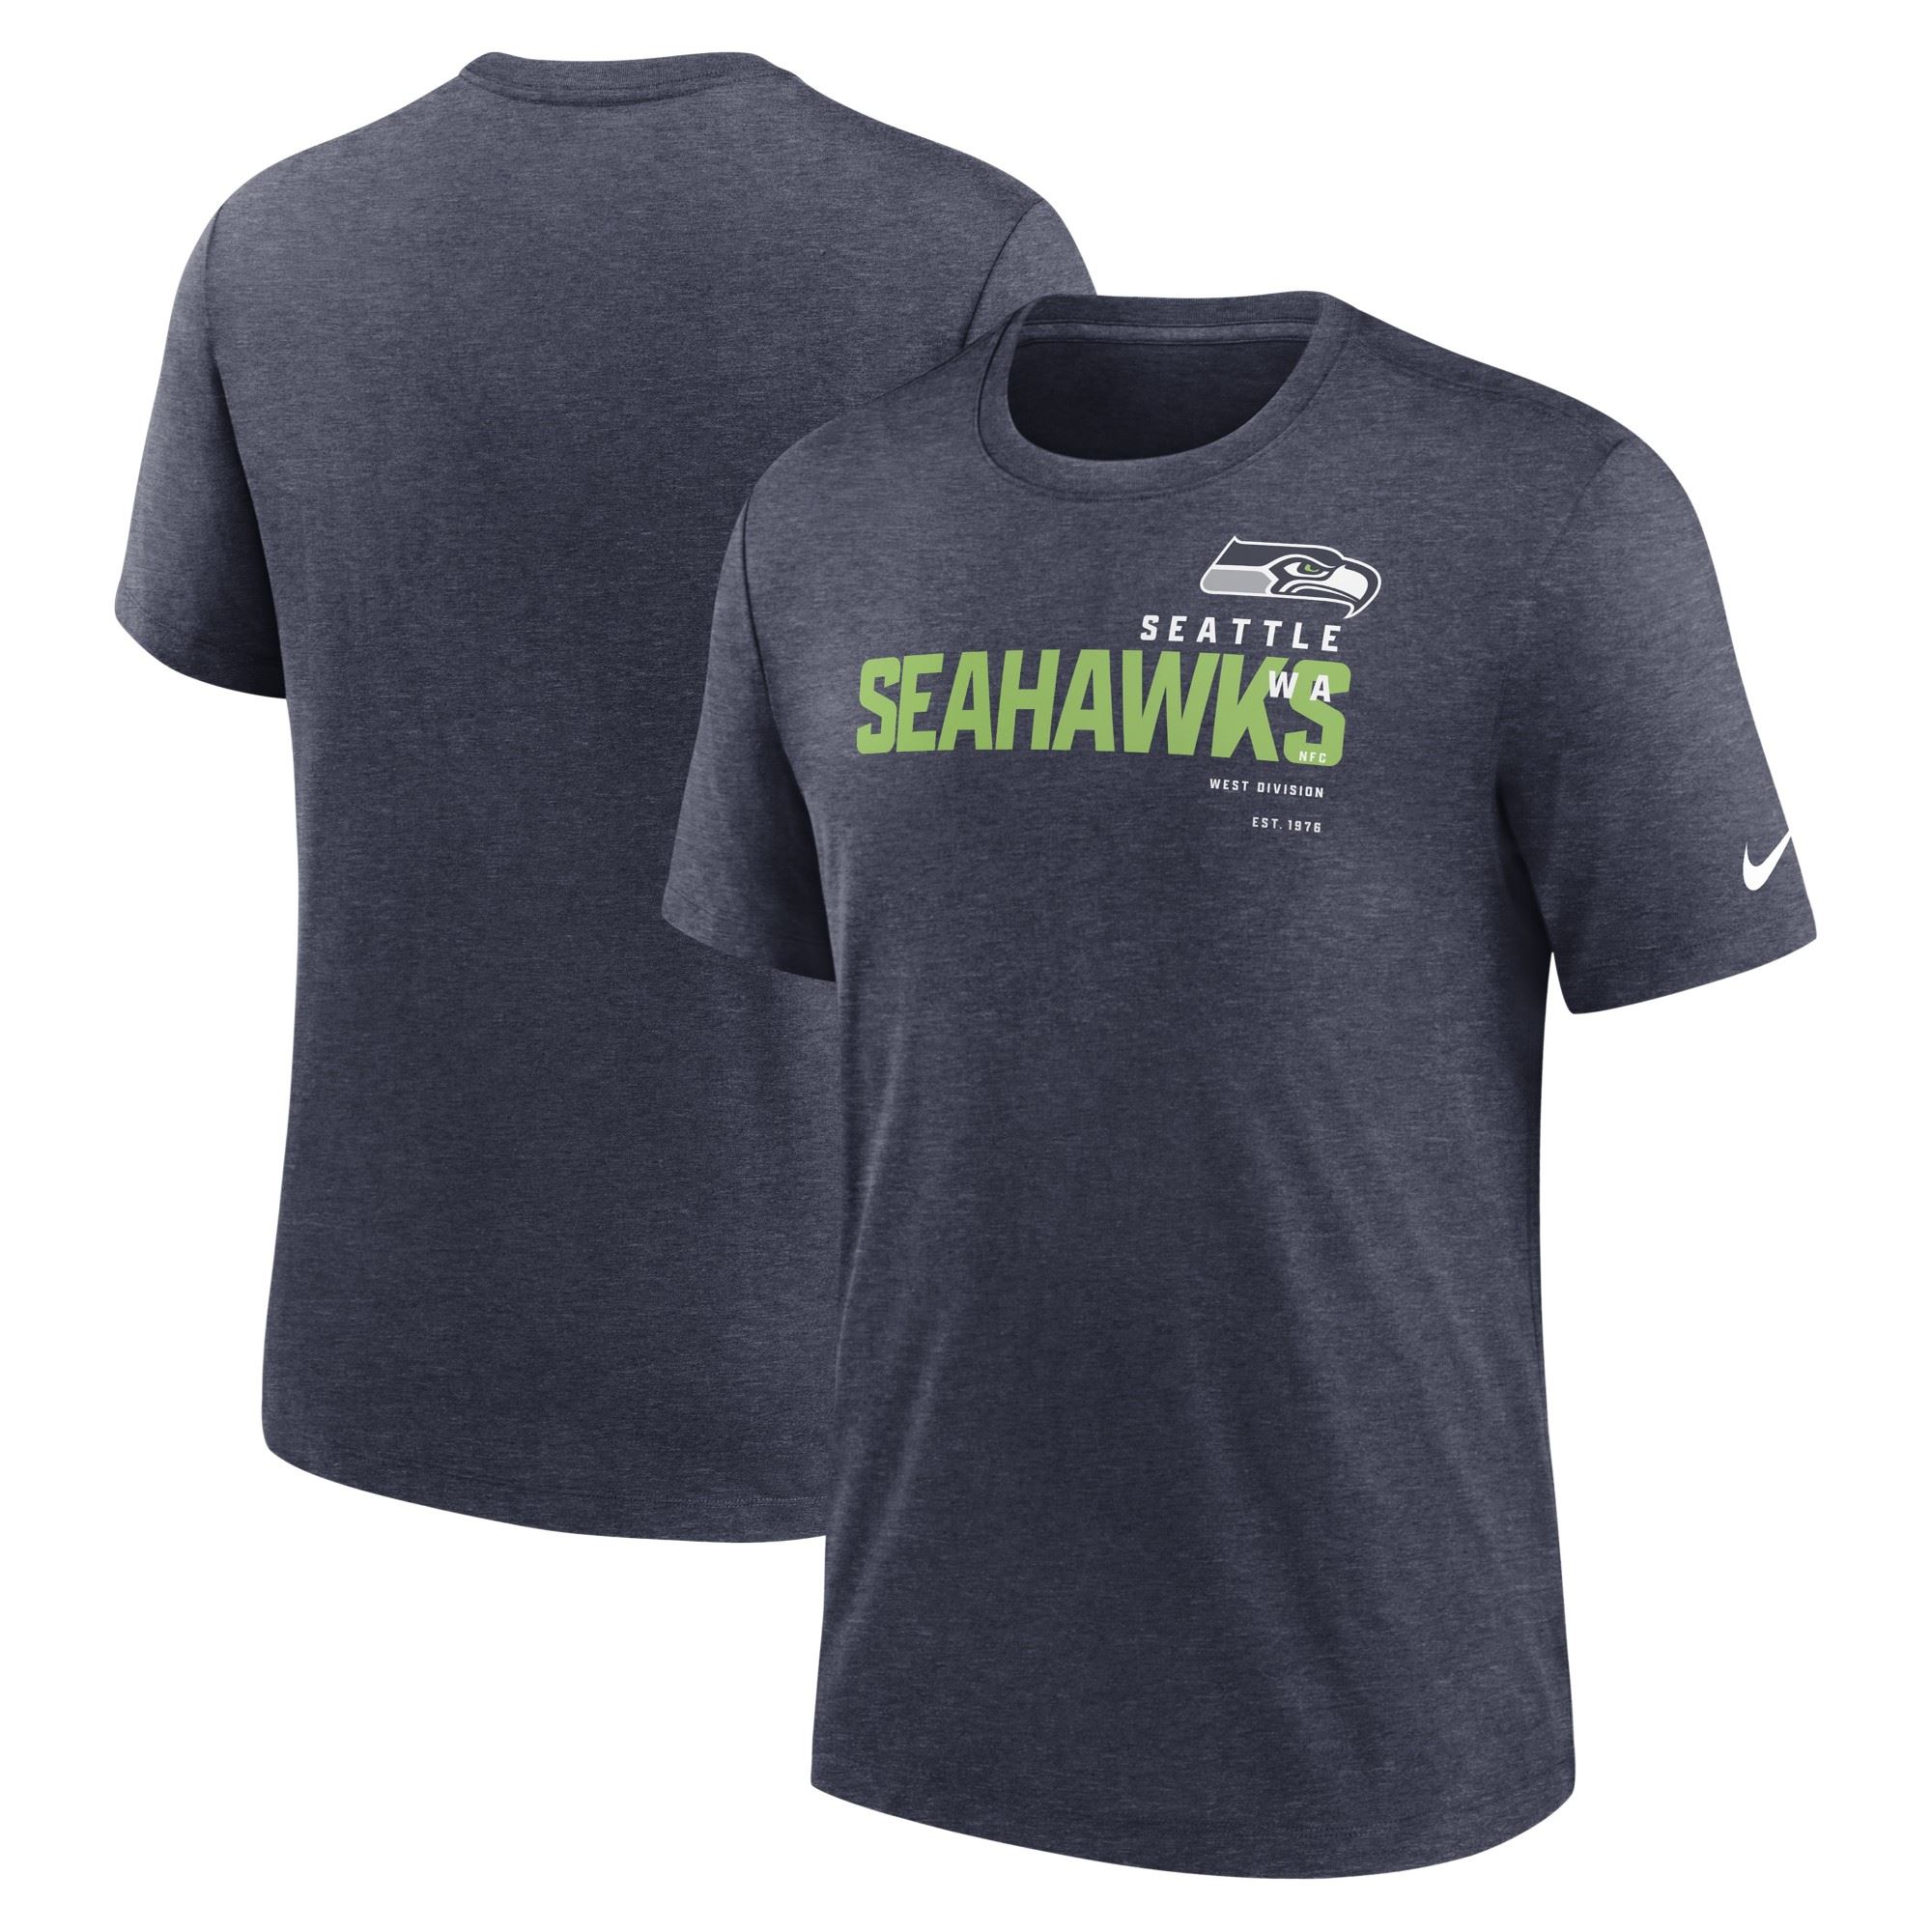 Seattle Seahawks NFL Triblend Team Name Fashion Navy Heather T-Shirt Nike